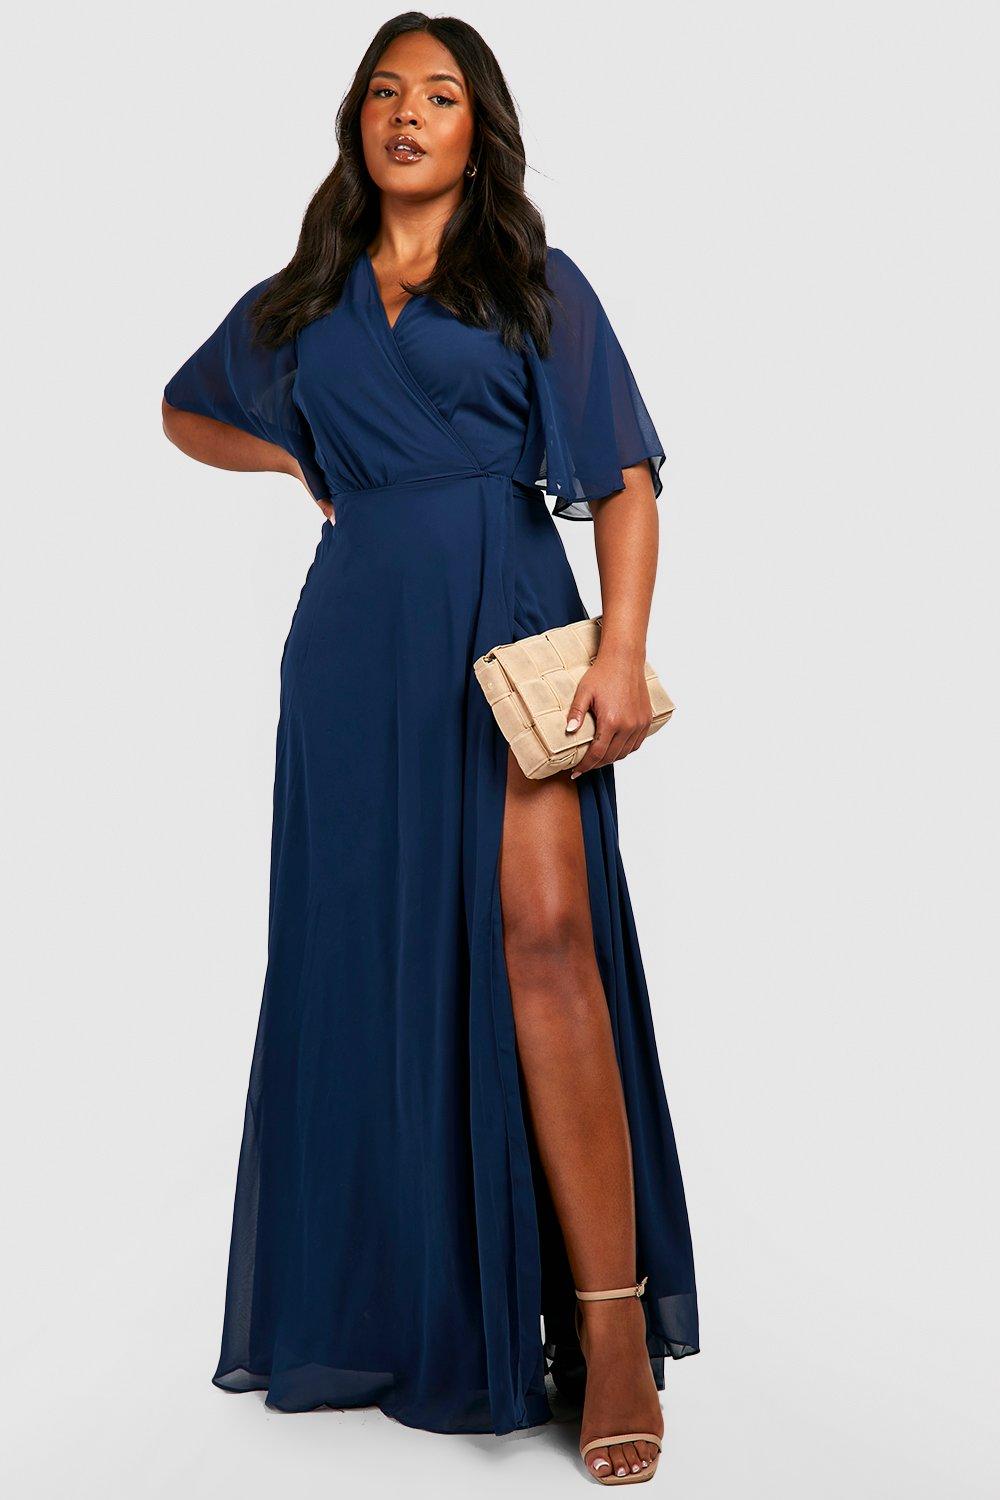 navy blue plus size dress